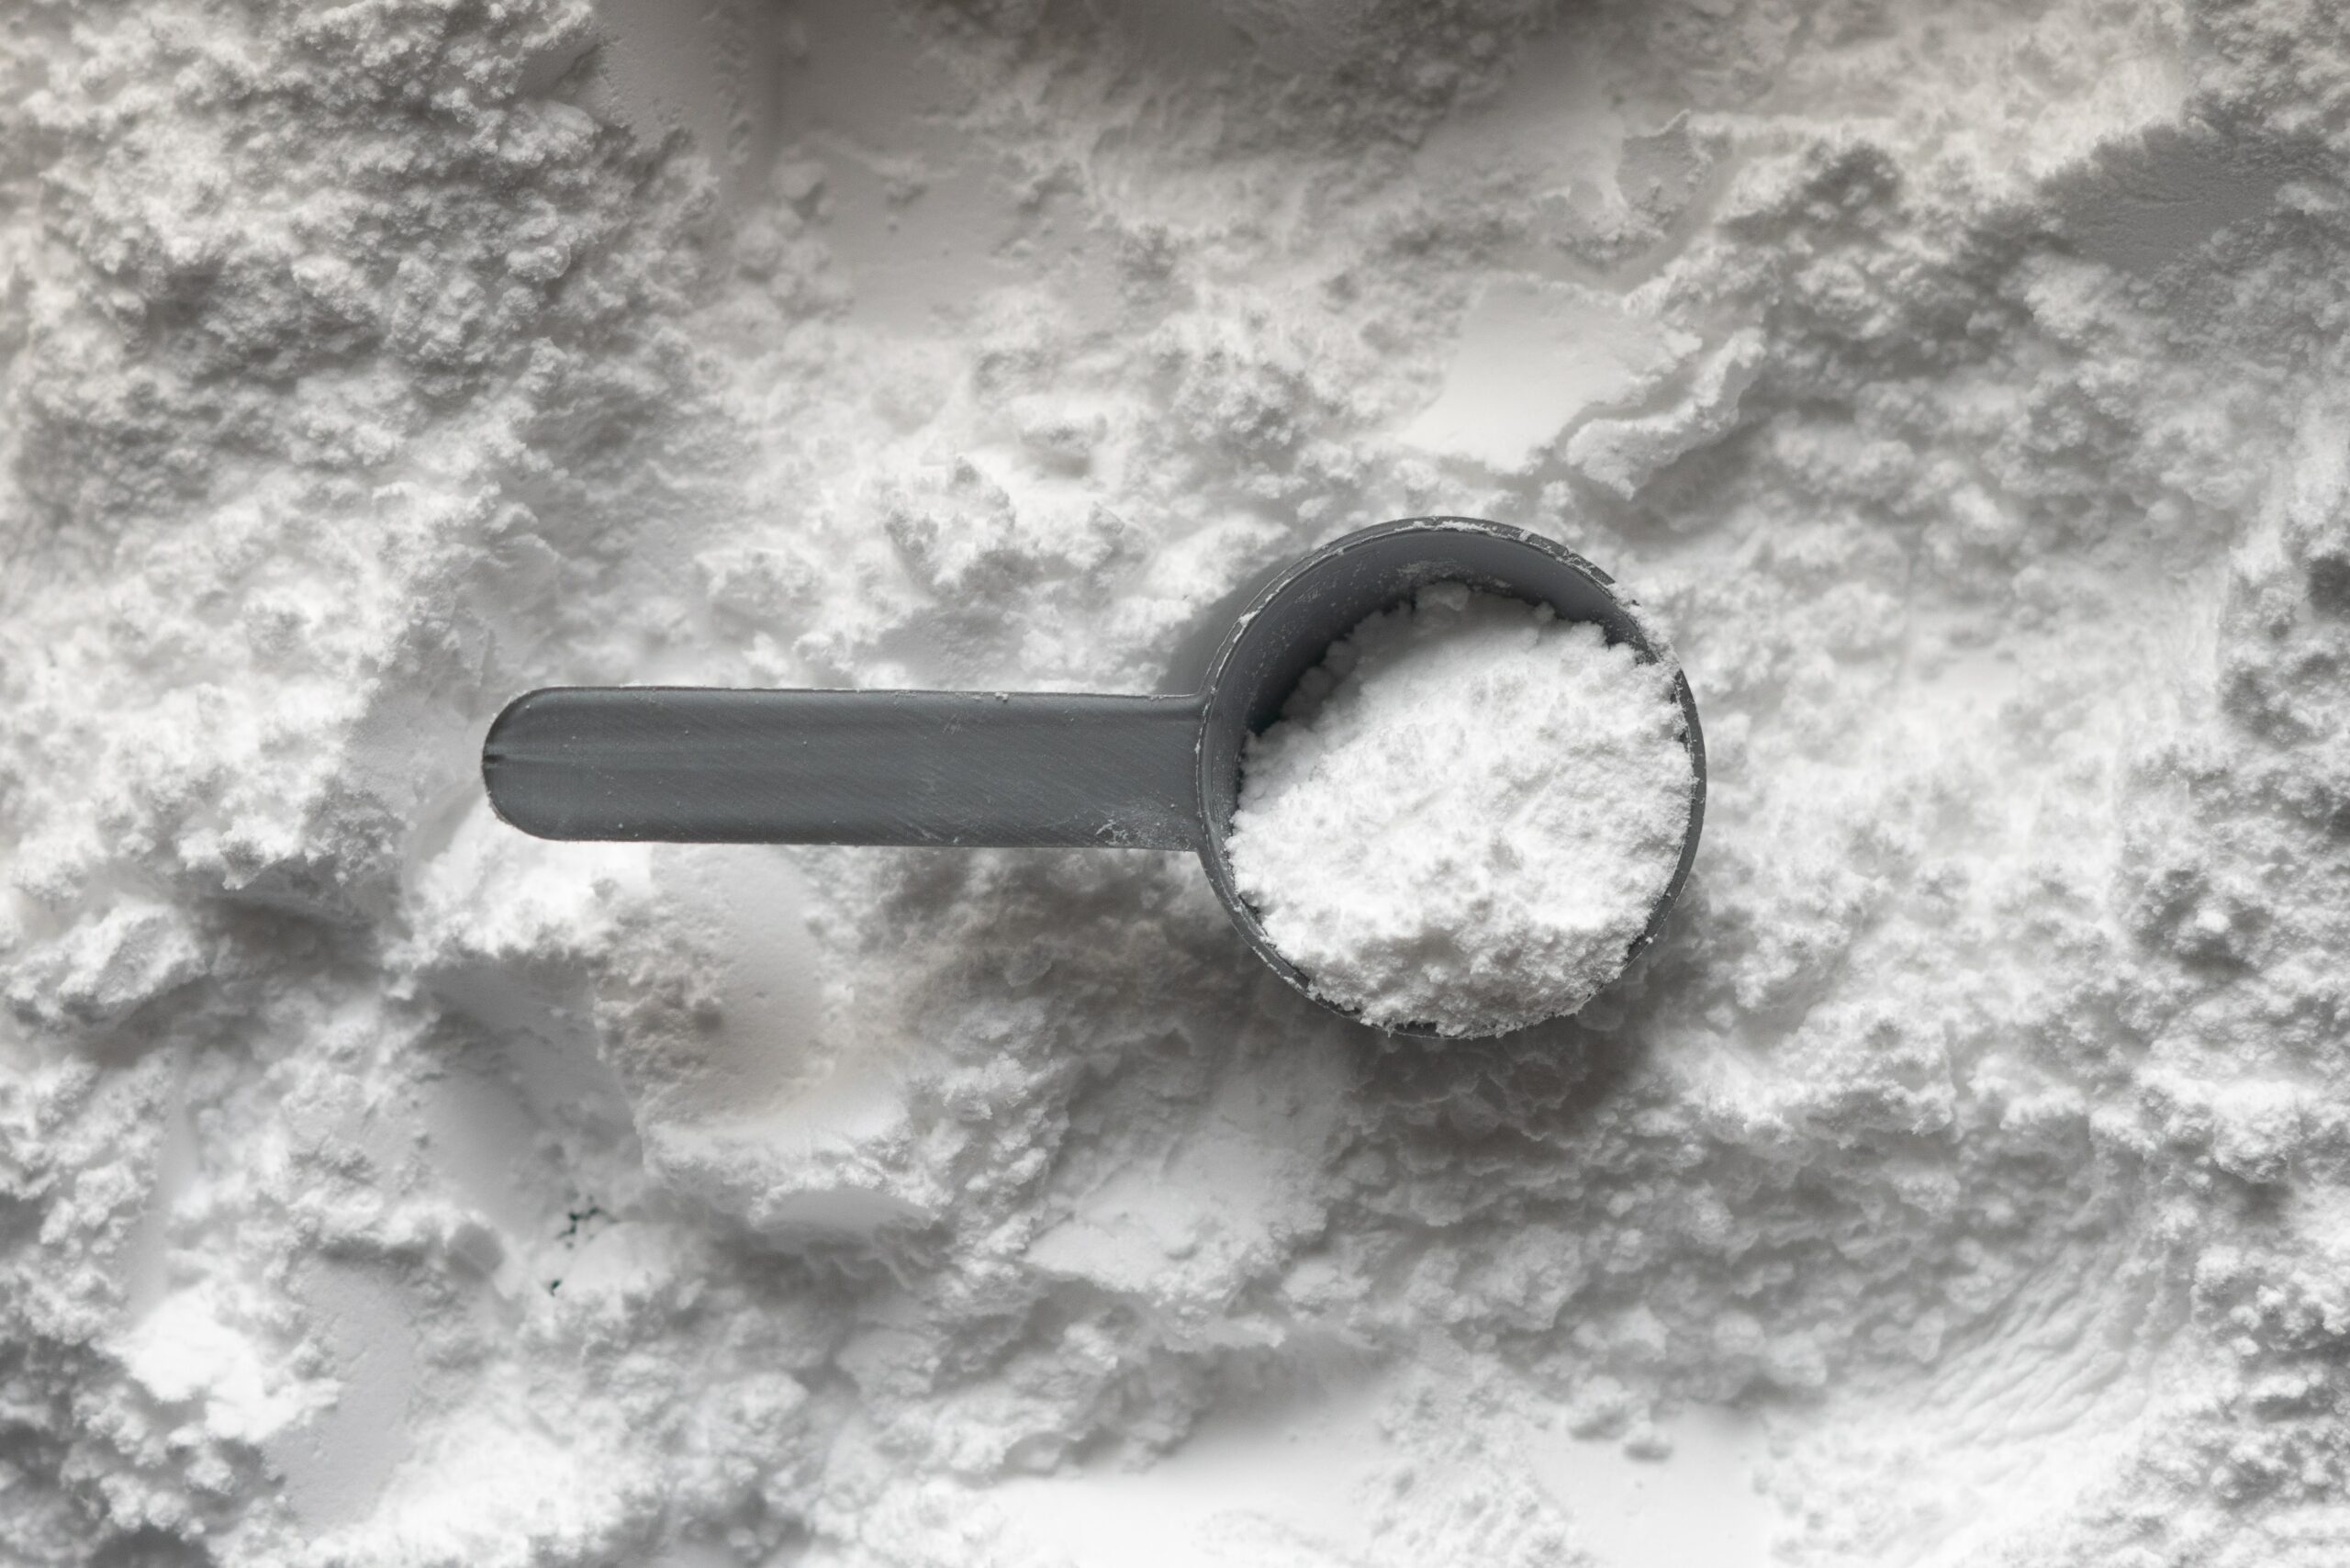 White creatine powder with one scoop full of powder